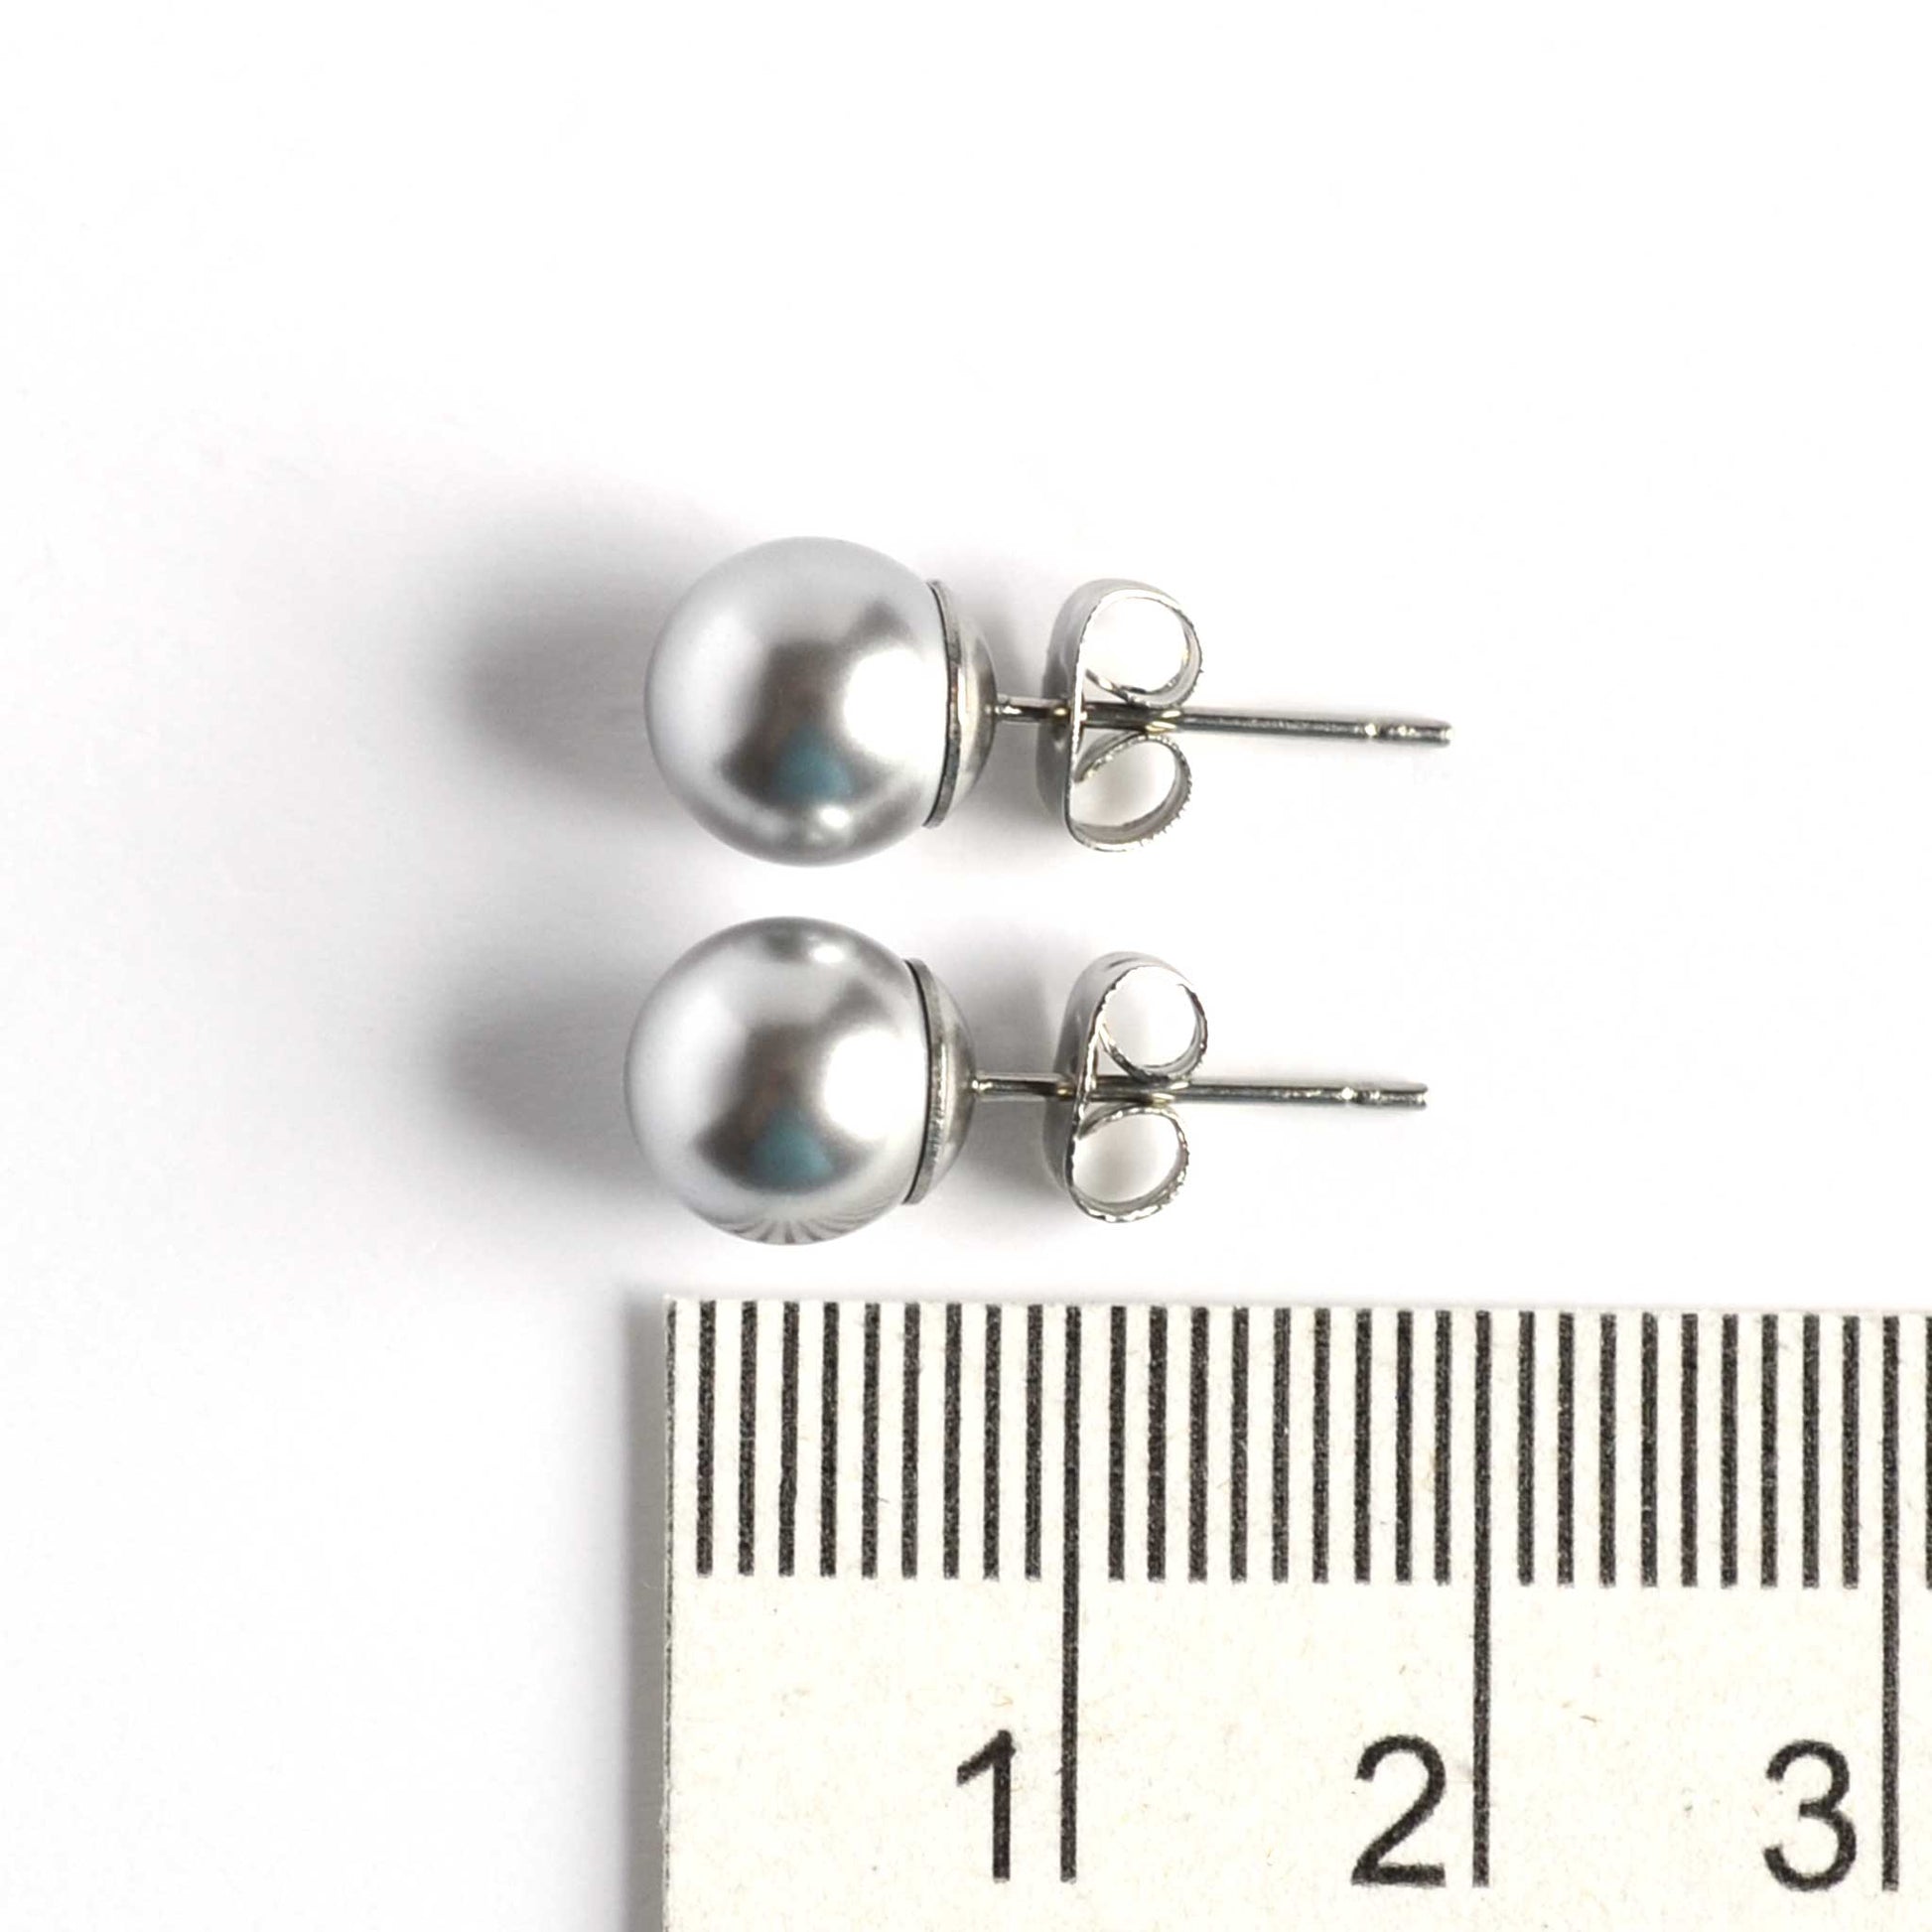 8mm light grey faux pearl stud earrings next to ruler